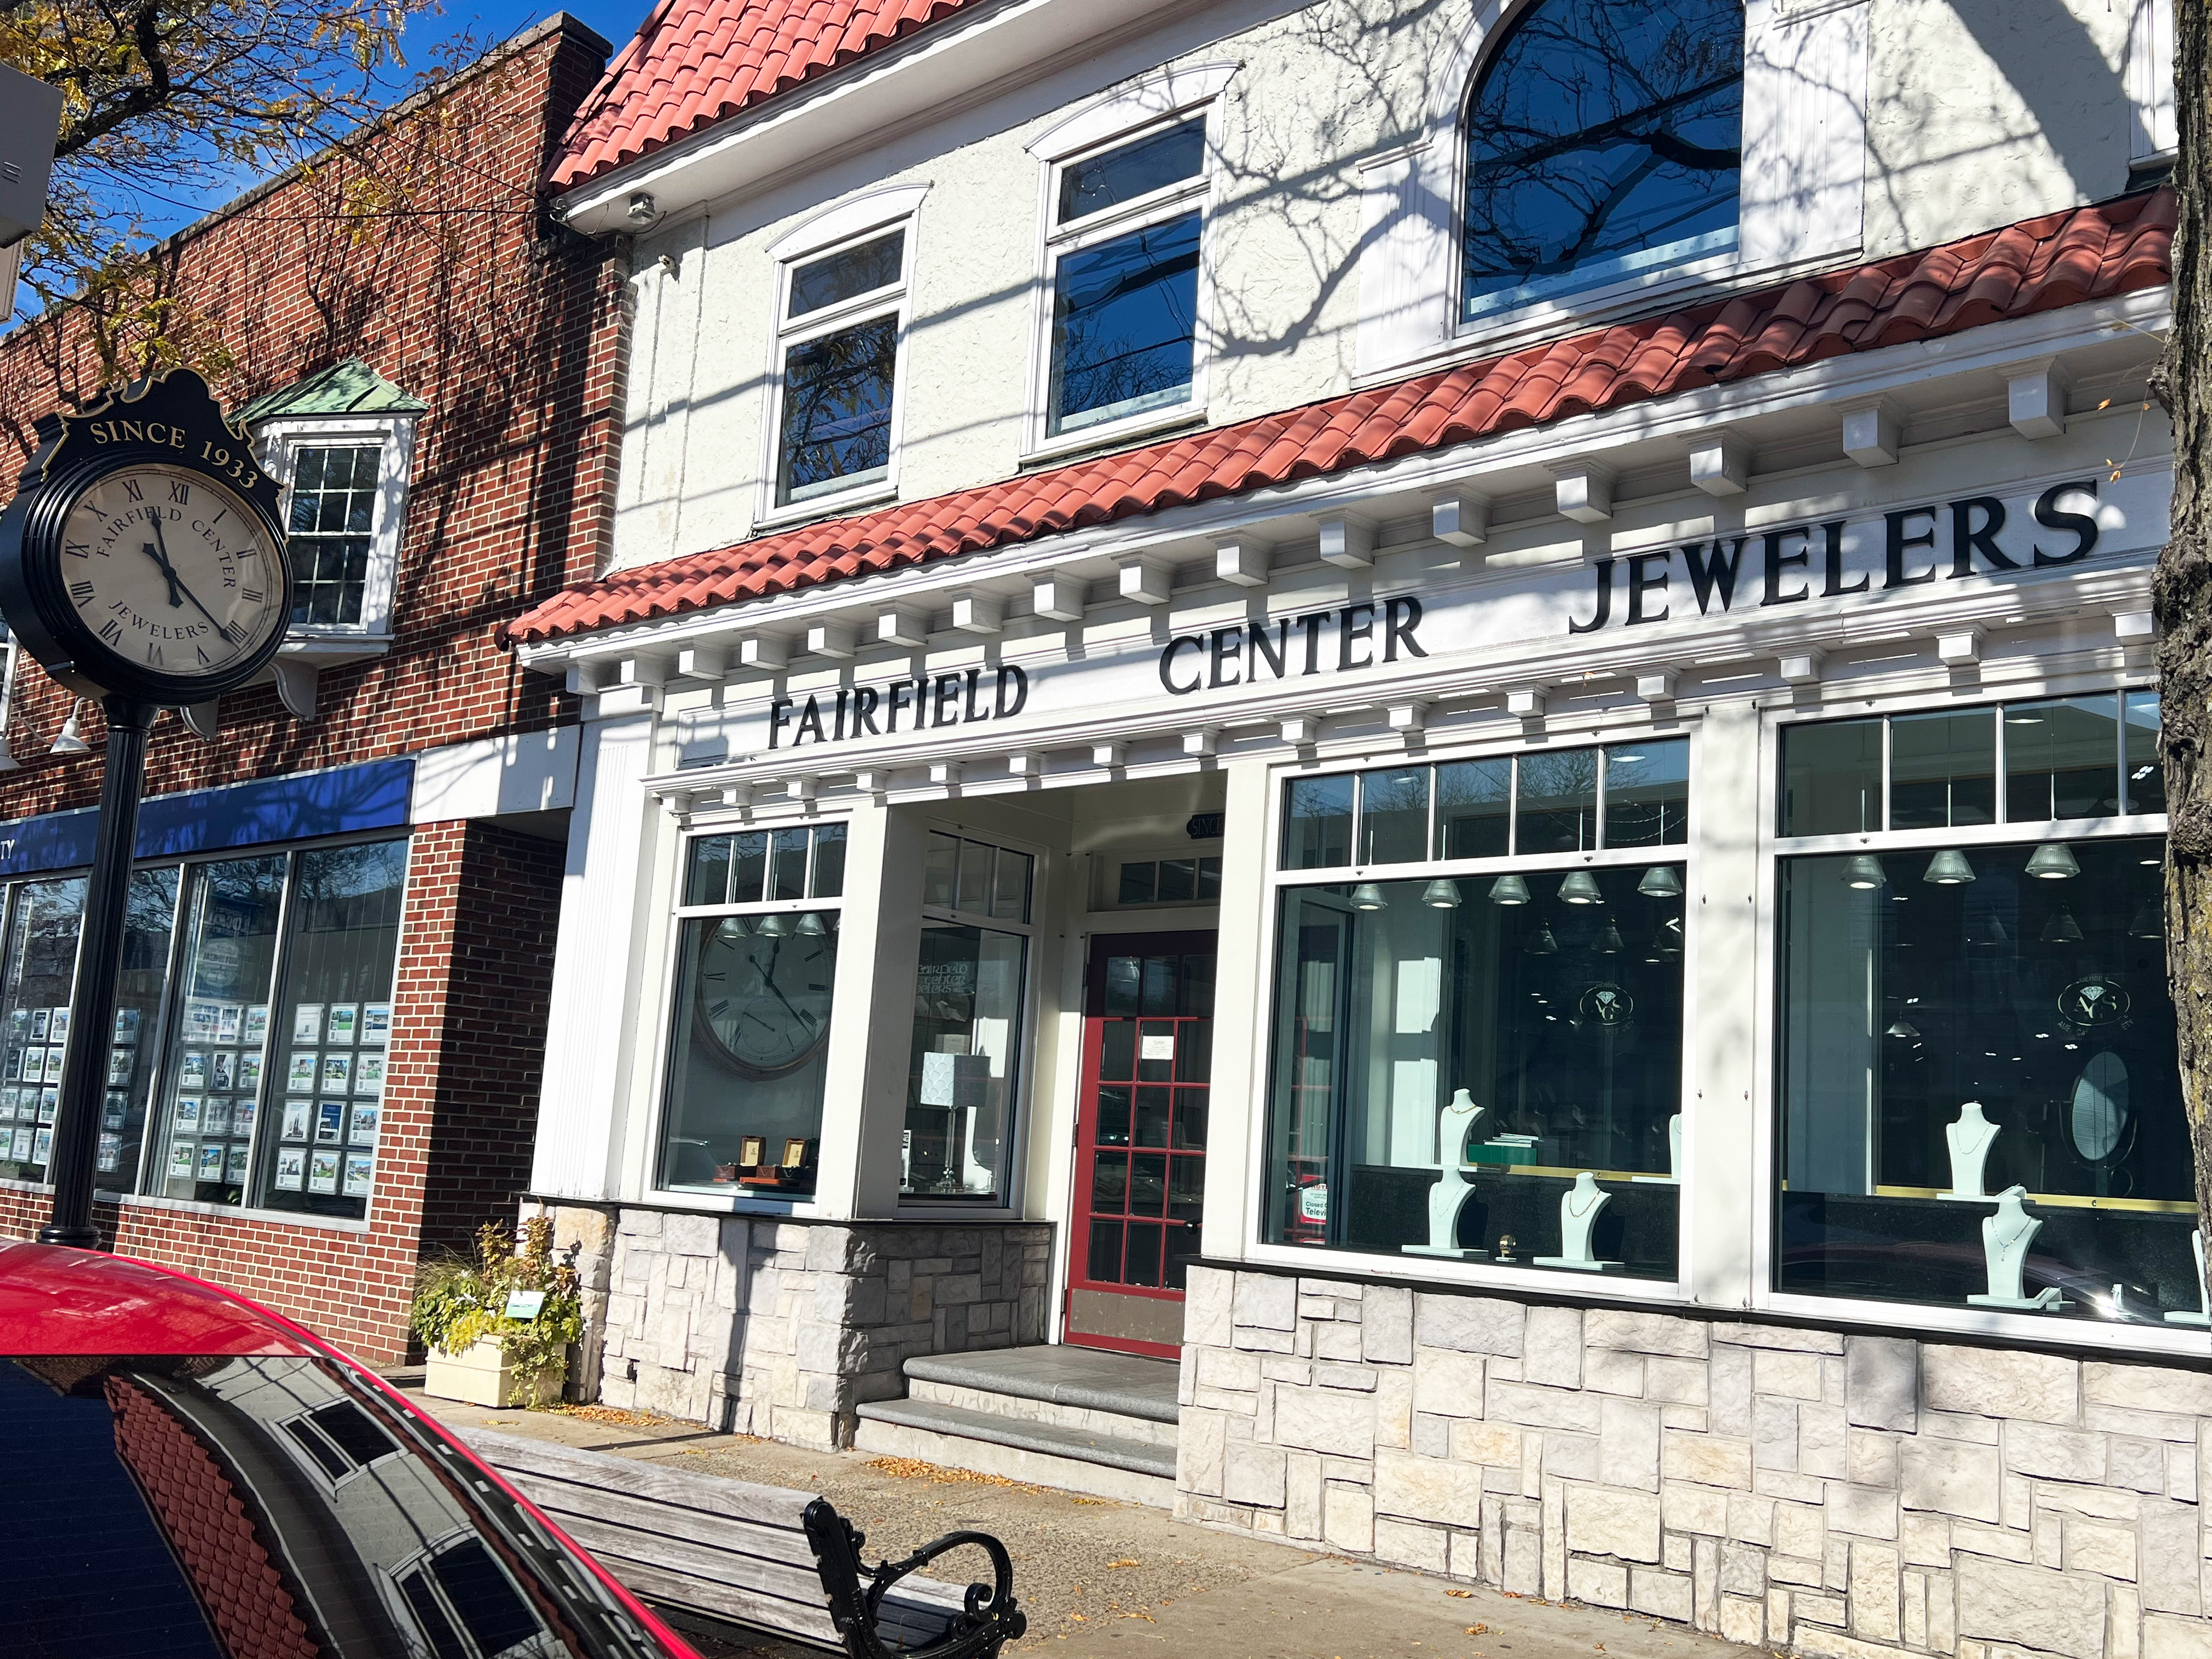 Location & Hours  Fairfield Center Jewelers Fairfield, CT